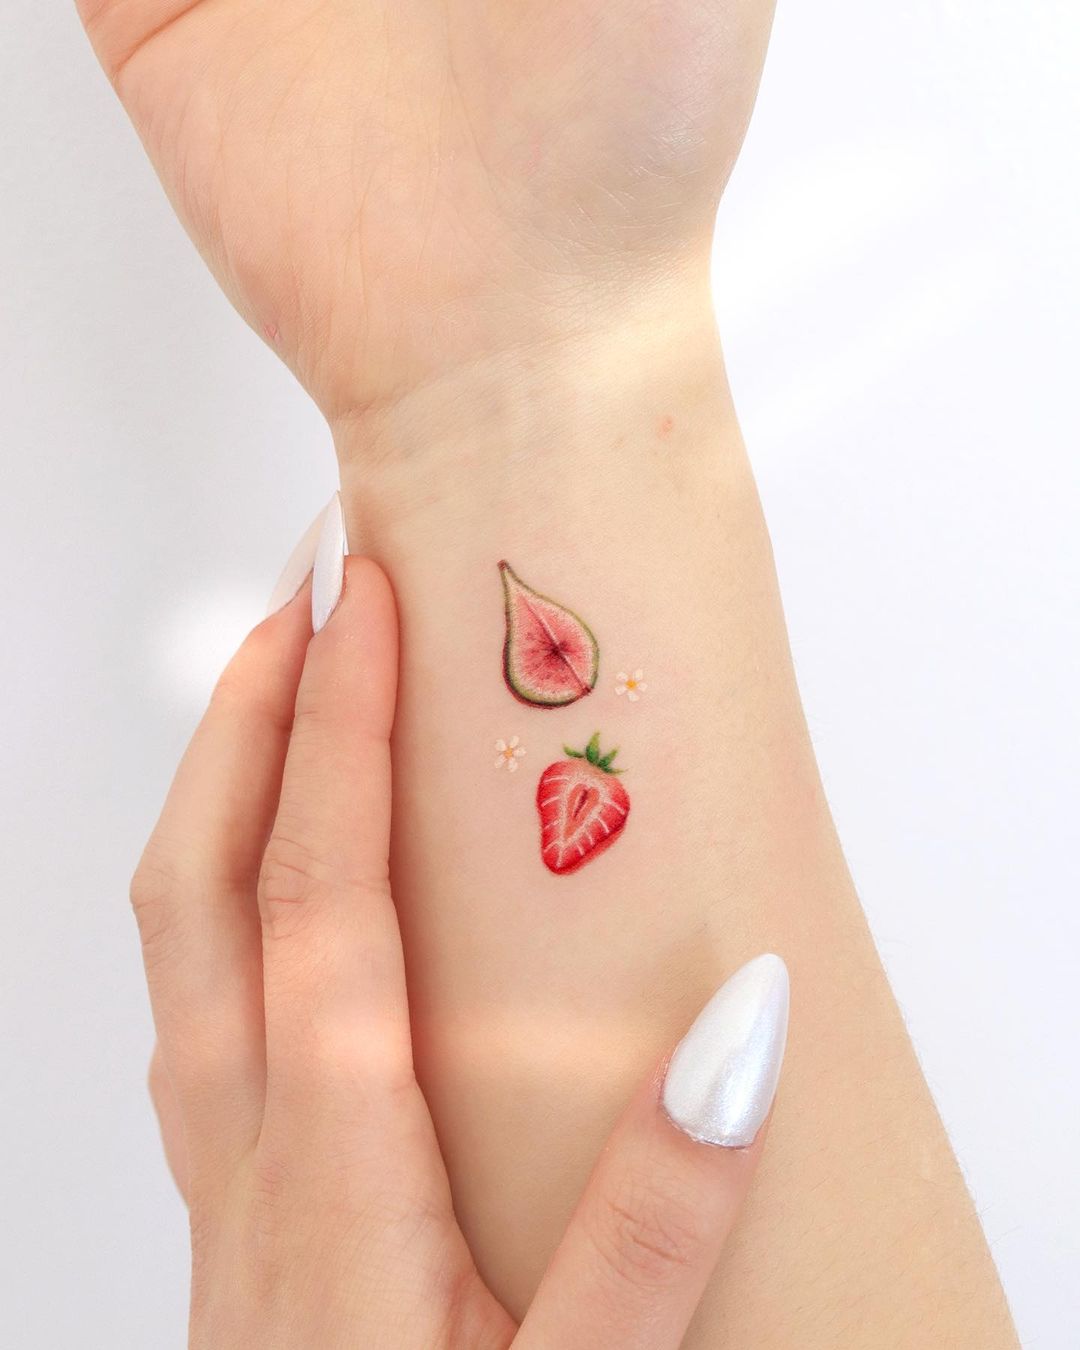 Abstract Leg Sleeve | Leg sleeve tattoo, Leg tattoos women, Colour tattoo  for women